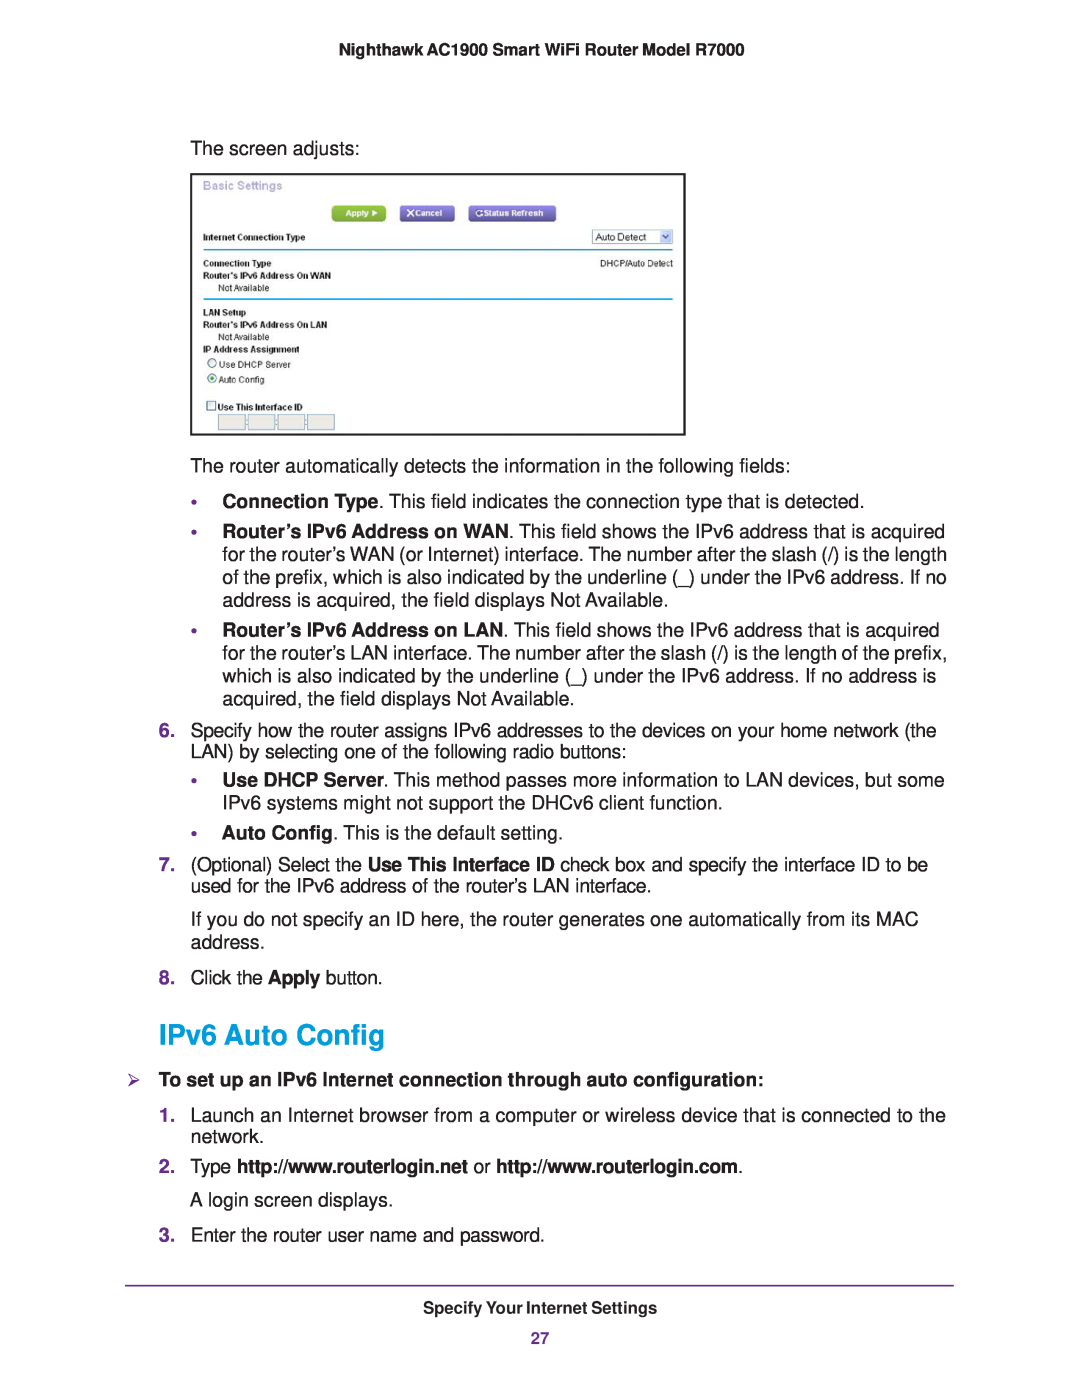 NETGEAR R7000 user manual IPv6 Auto Config,  To set up an IPv6 Internet connection through auto configuration 